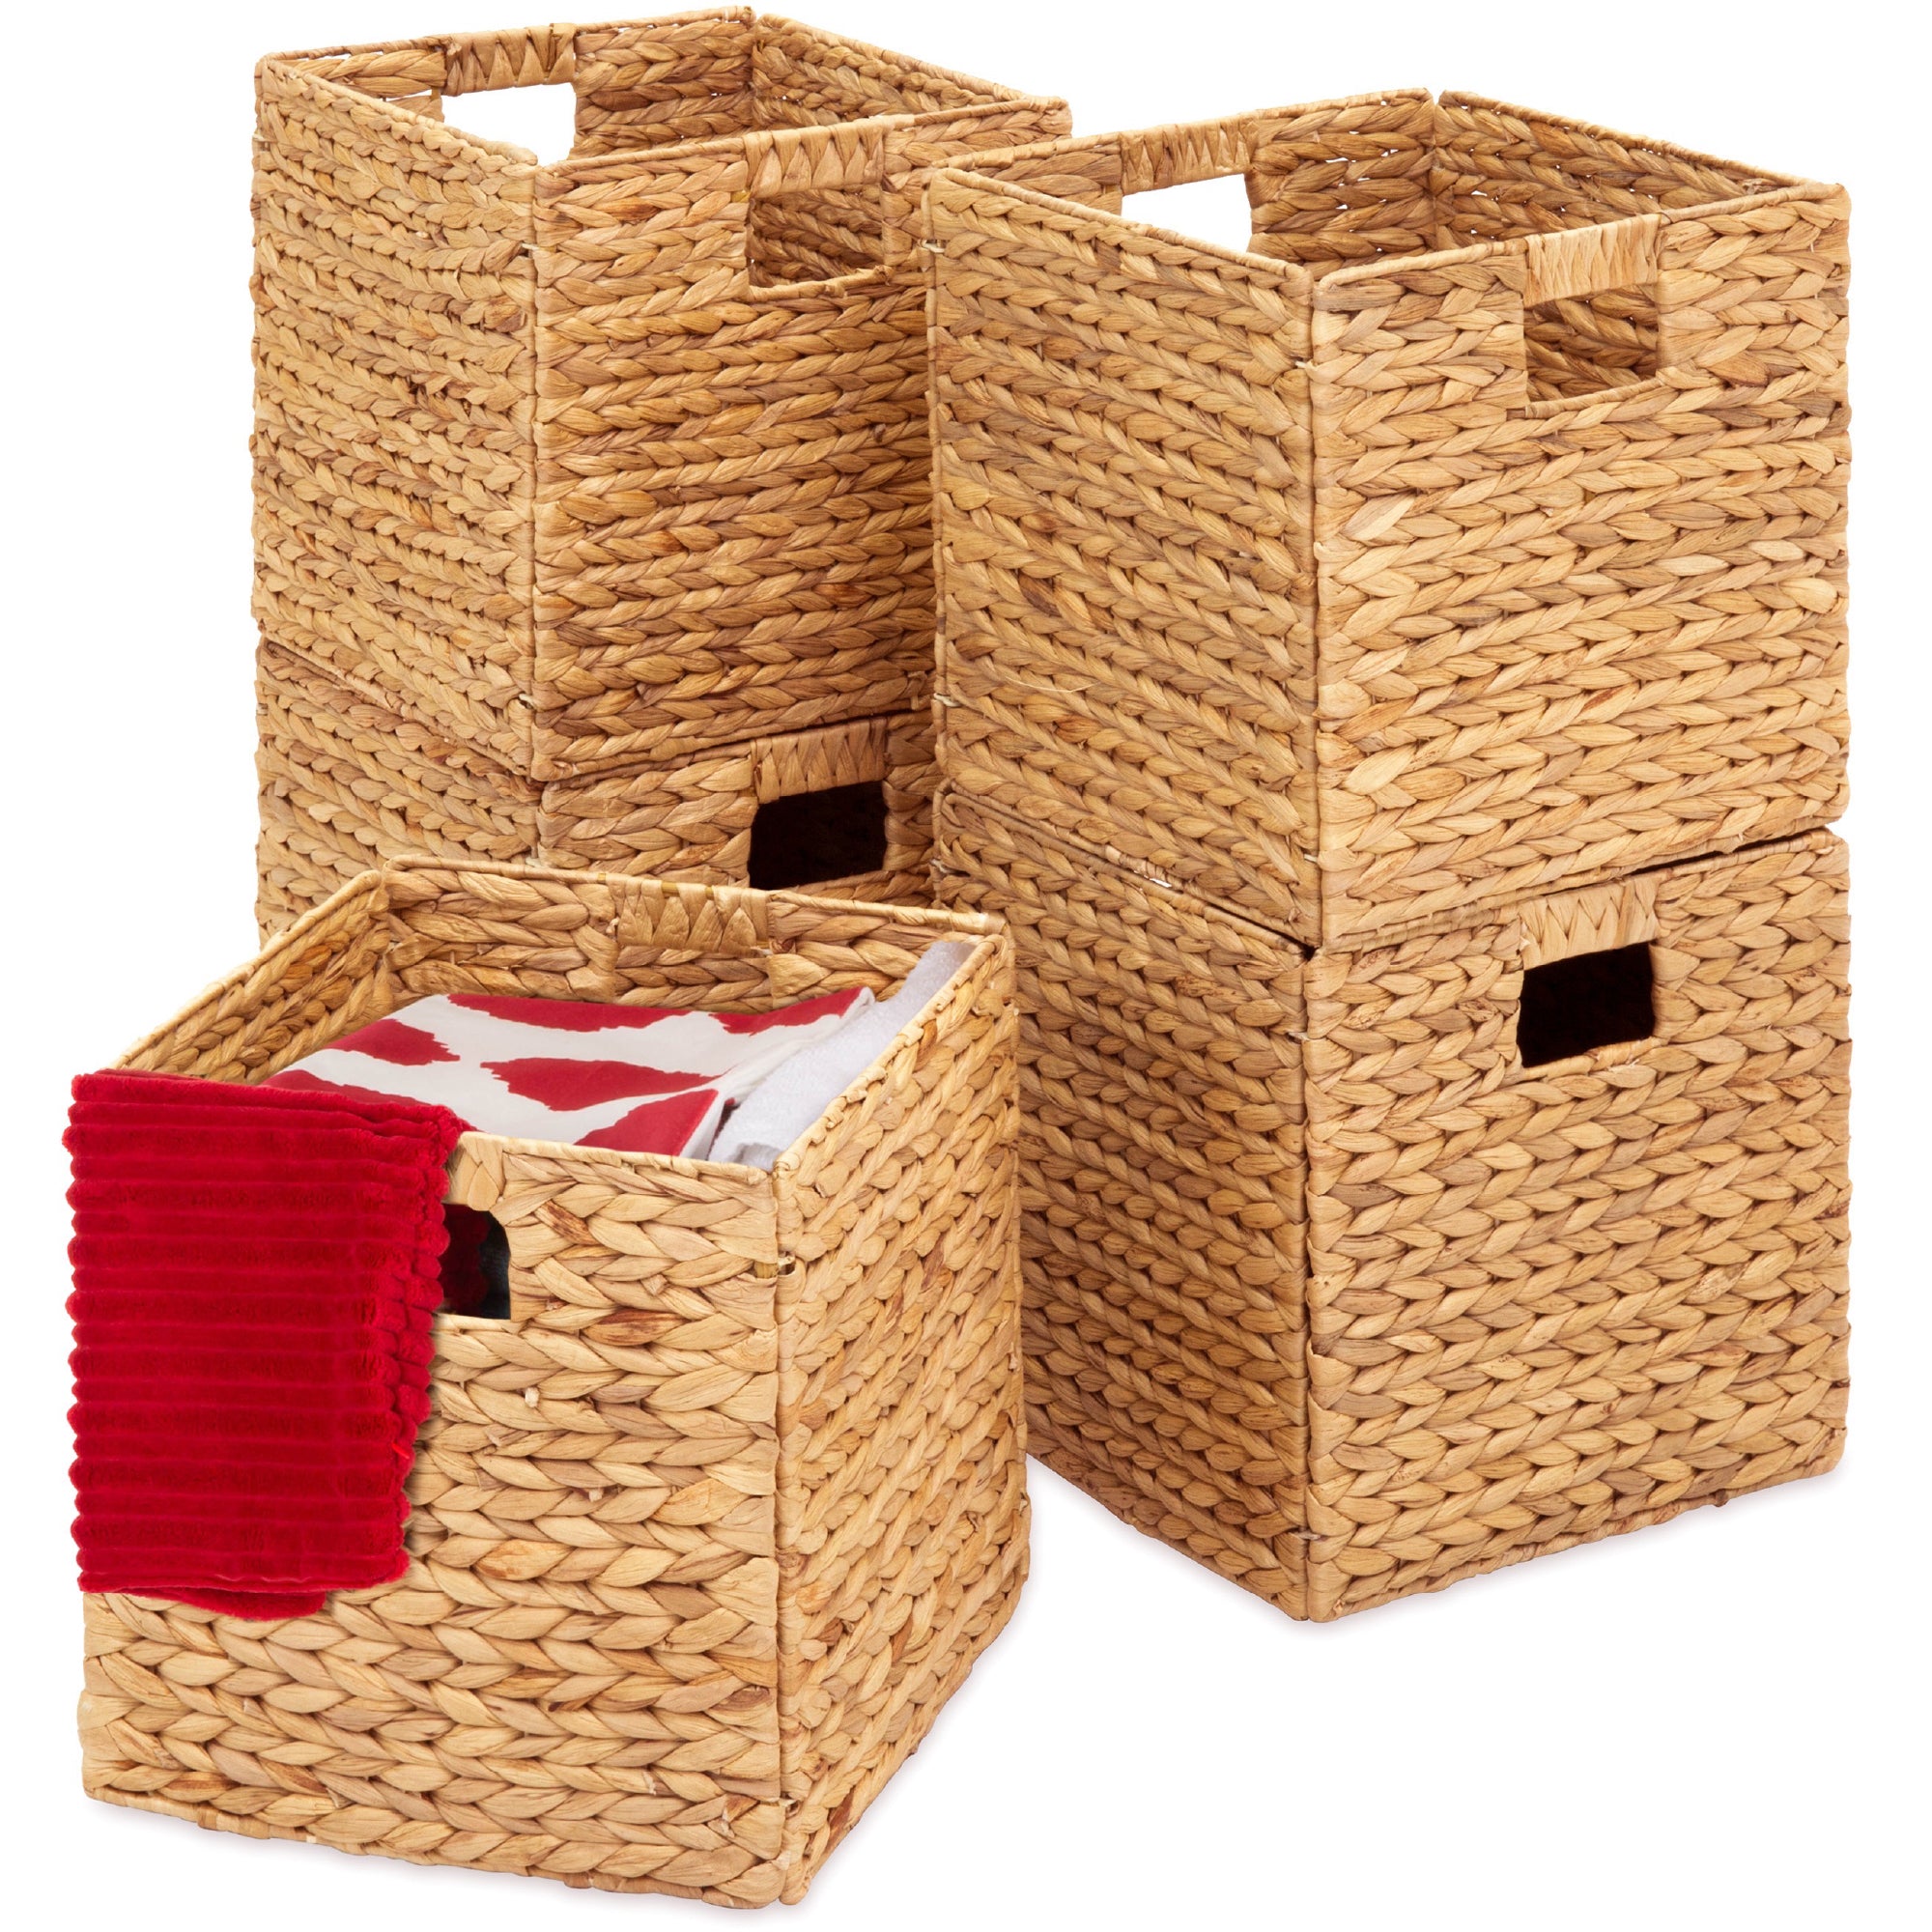 Five Basket Storage Unit with Baskets - Fabric Baskets/Cherry